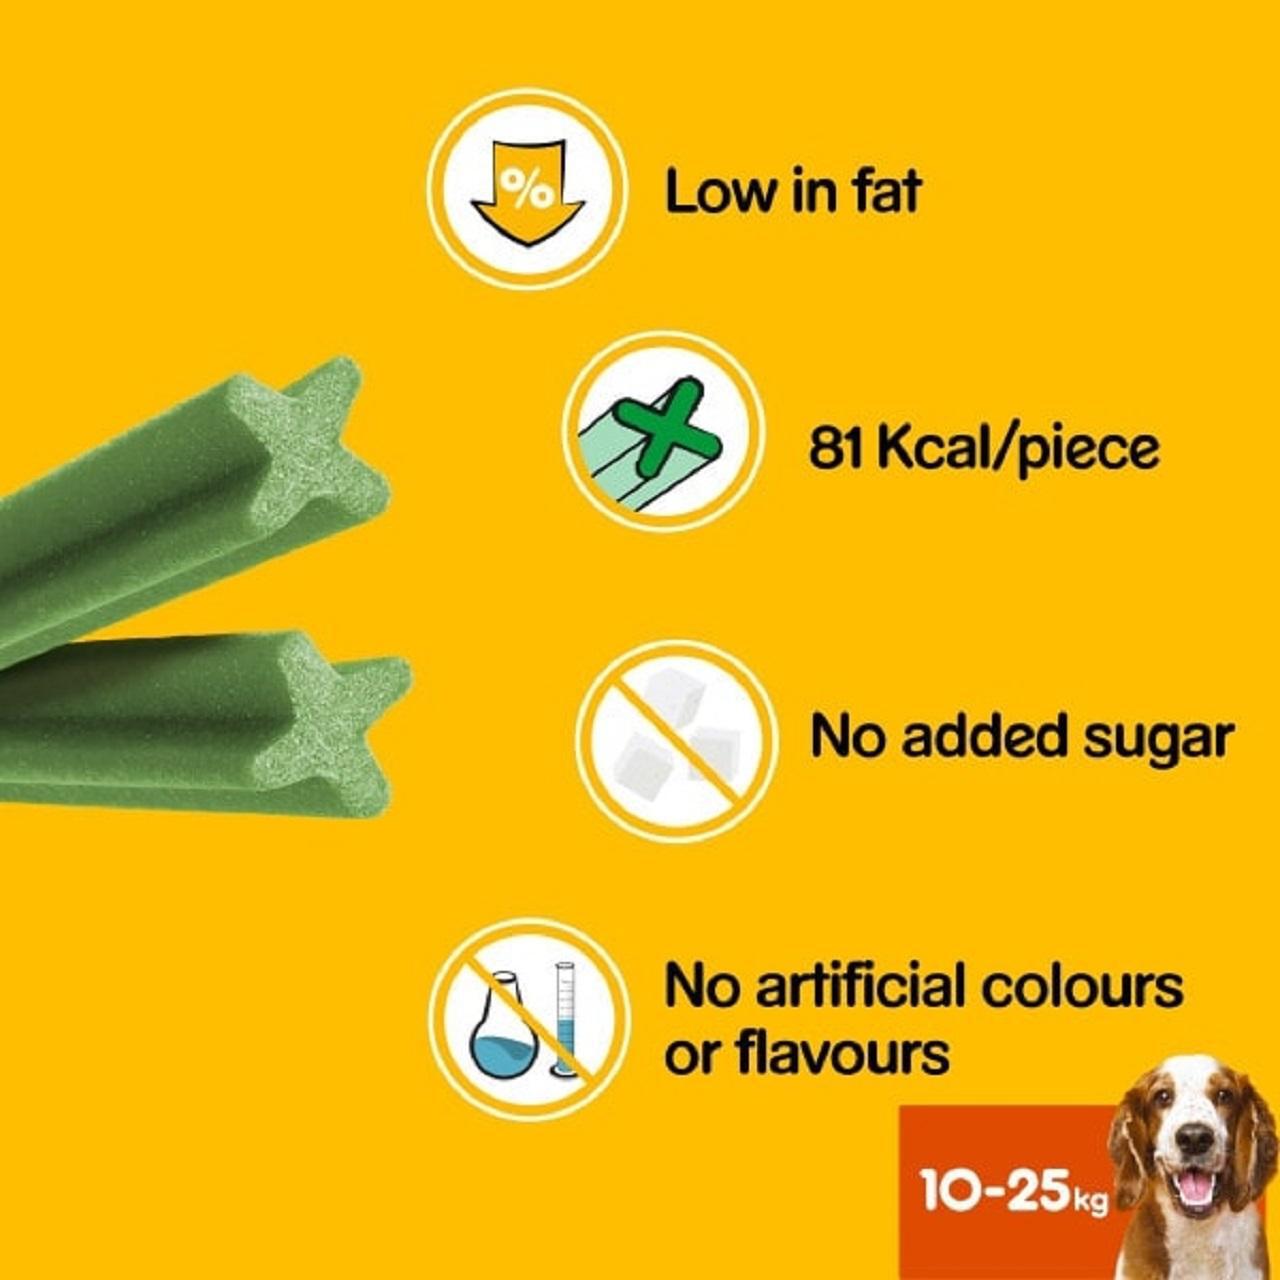 Pedigree Dentastix Fresh Adult Medium Dog Treats Dental Sticks 28 x 26g